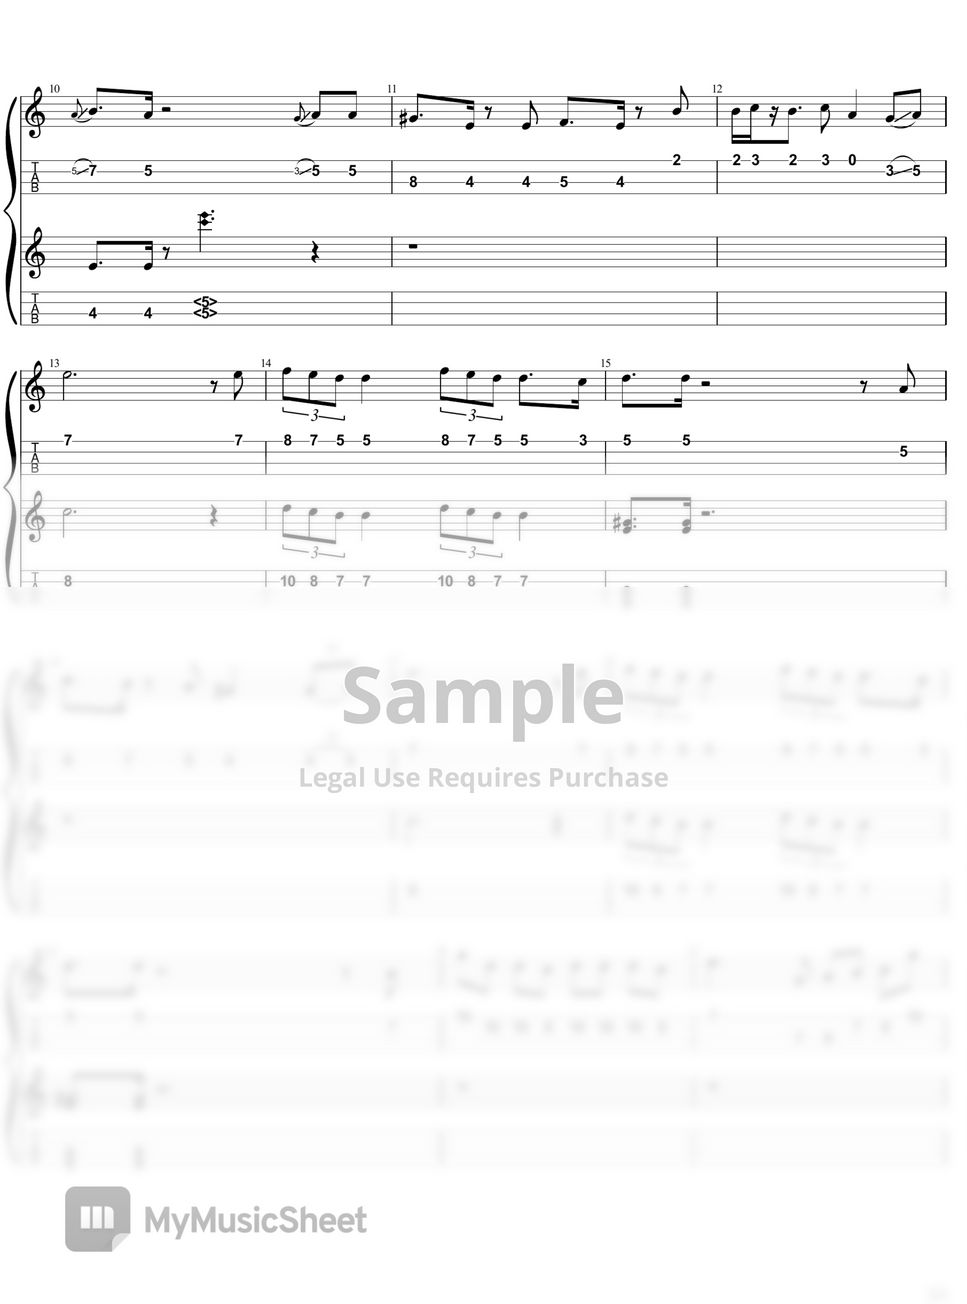 BTS - Filter (ukulele trio) by P3